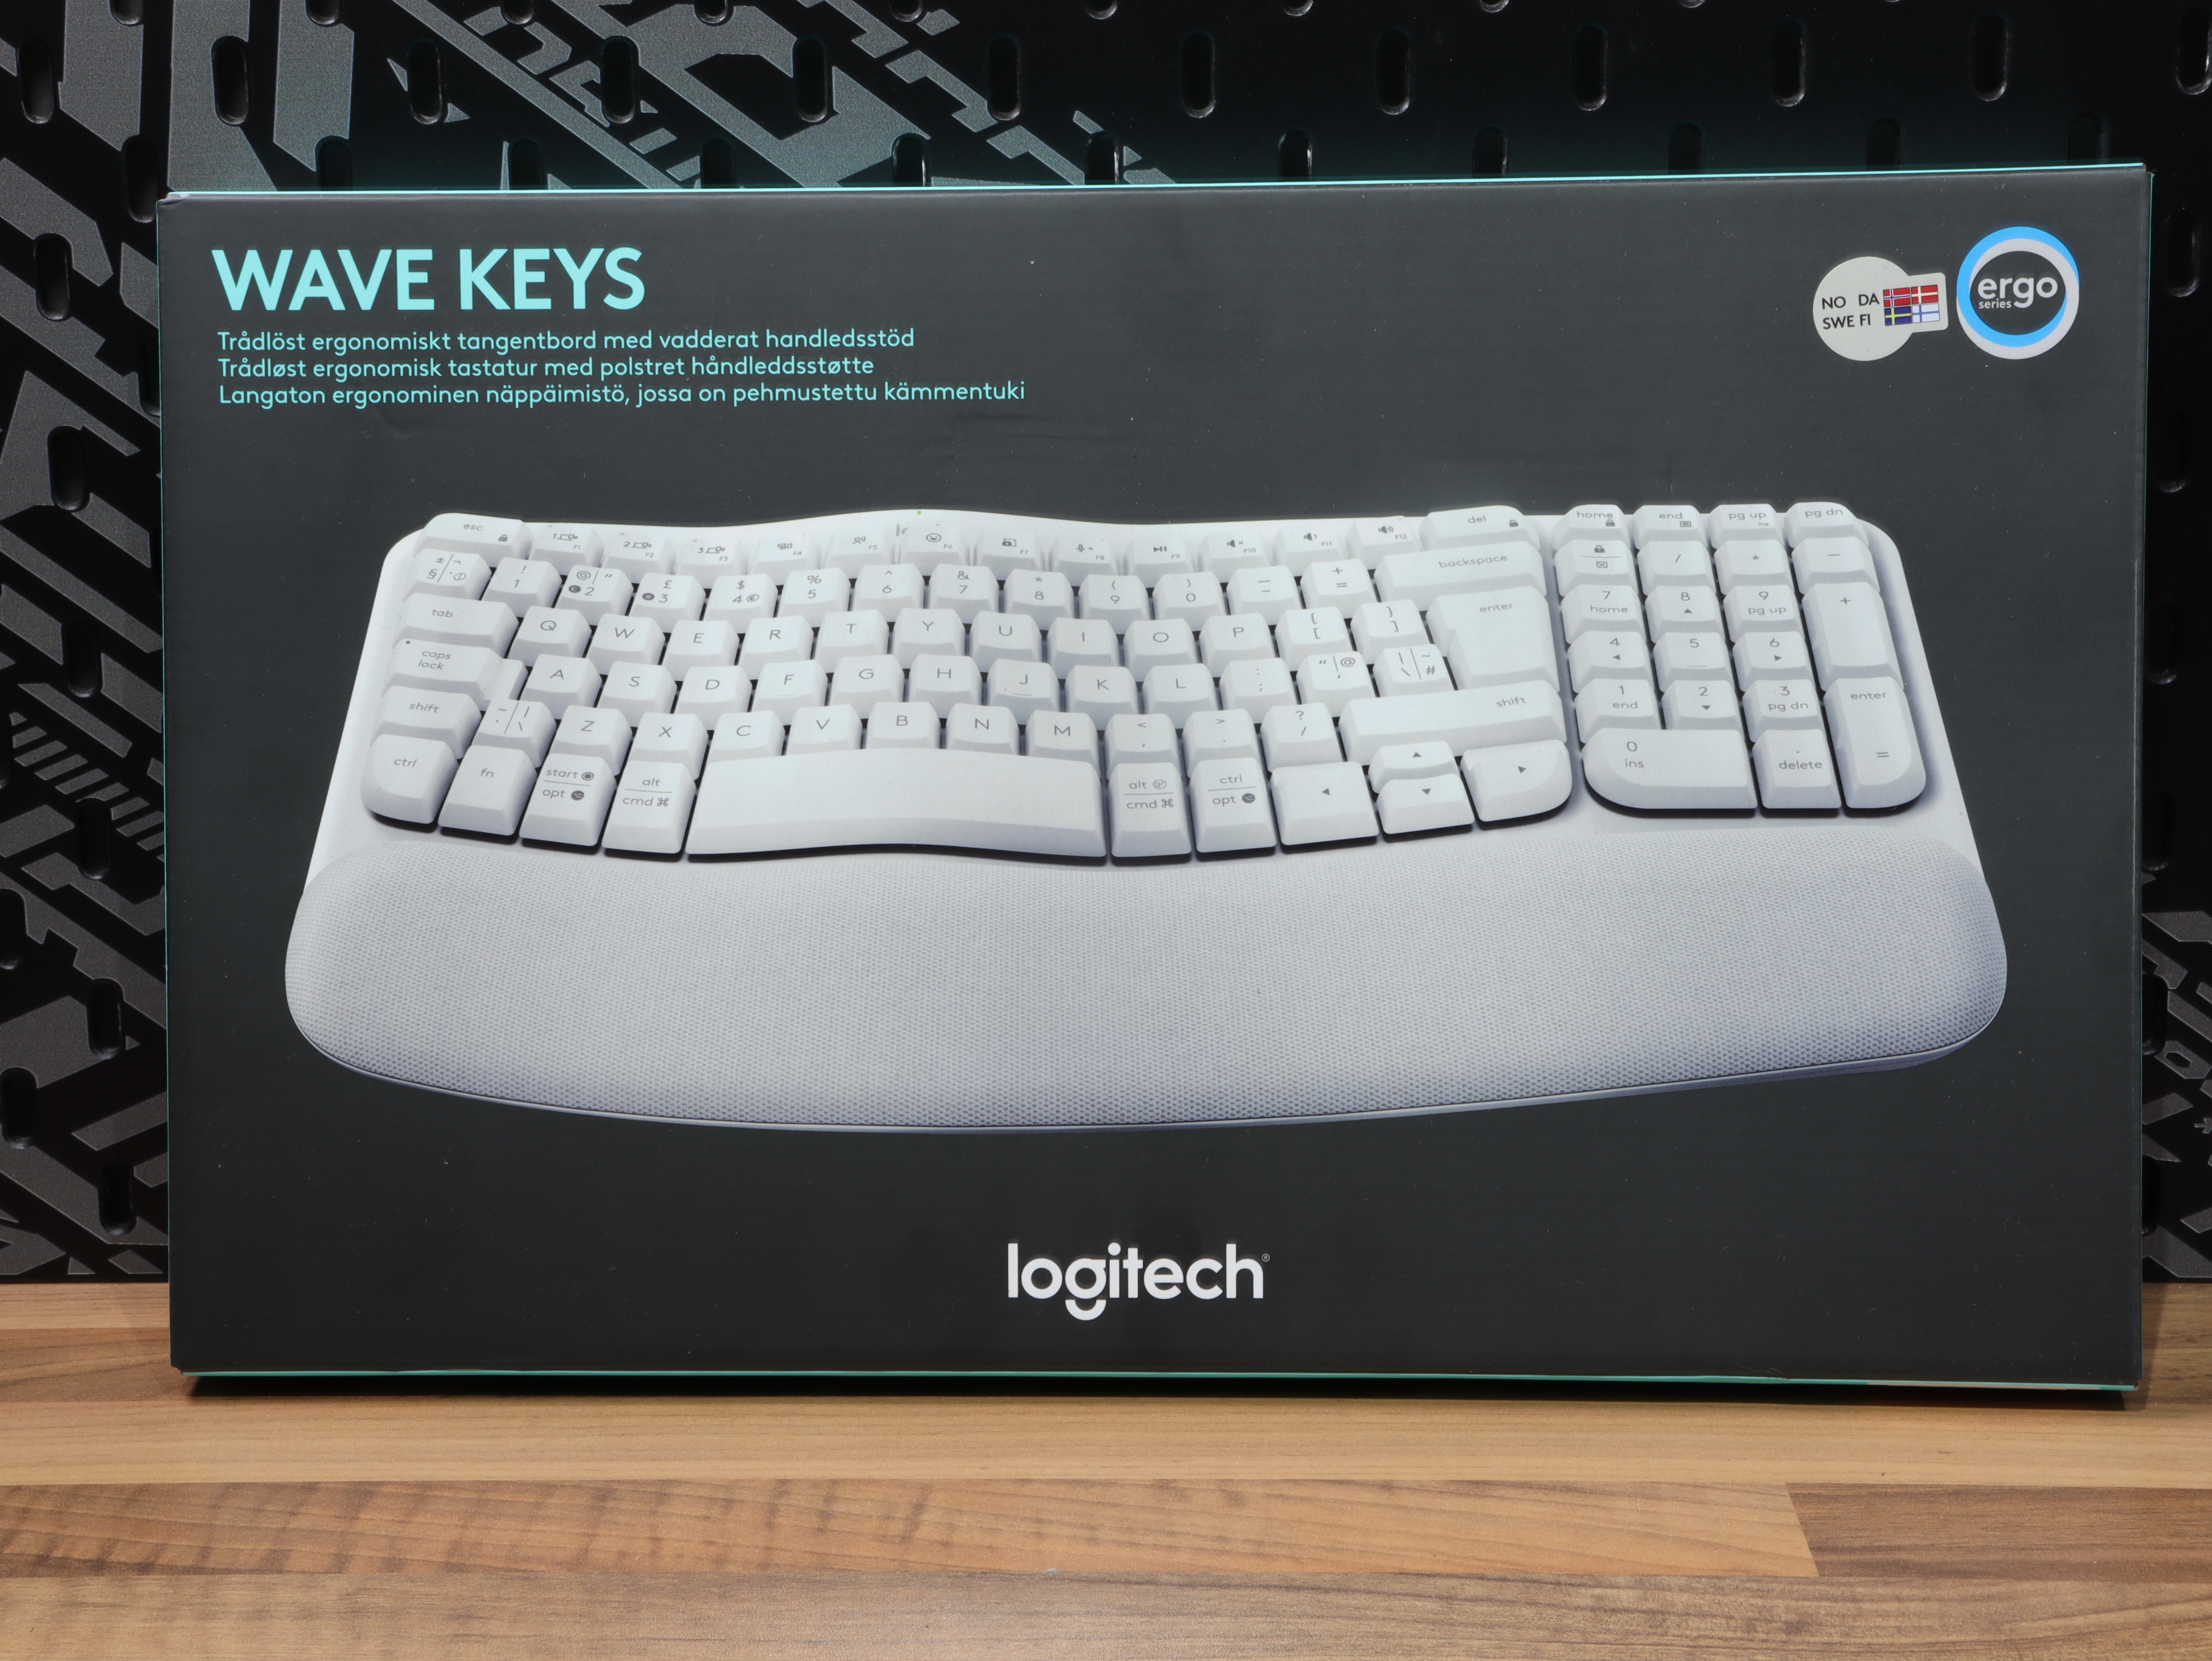 ergonomic keyboard multiOS Waves keys Logitech multifunction CO2-neutral comfort lodging options+.JPG